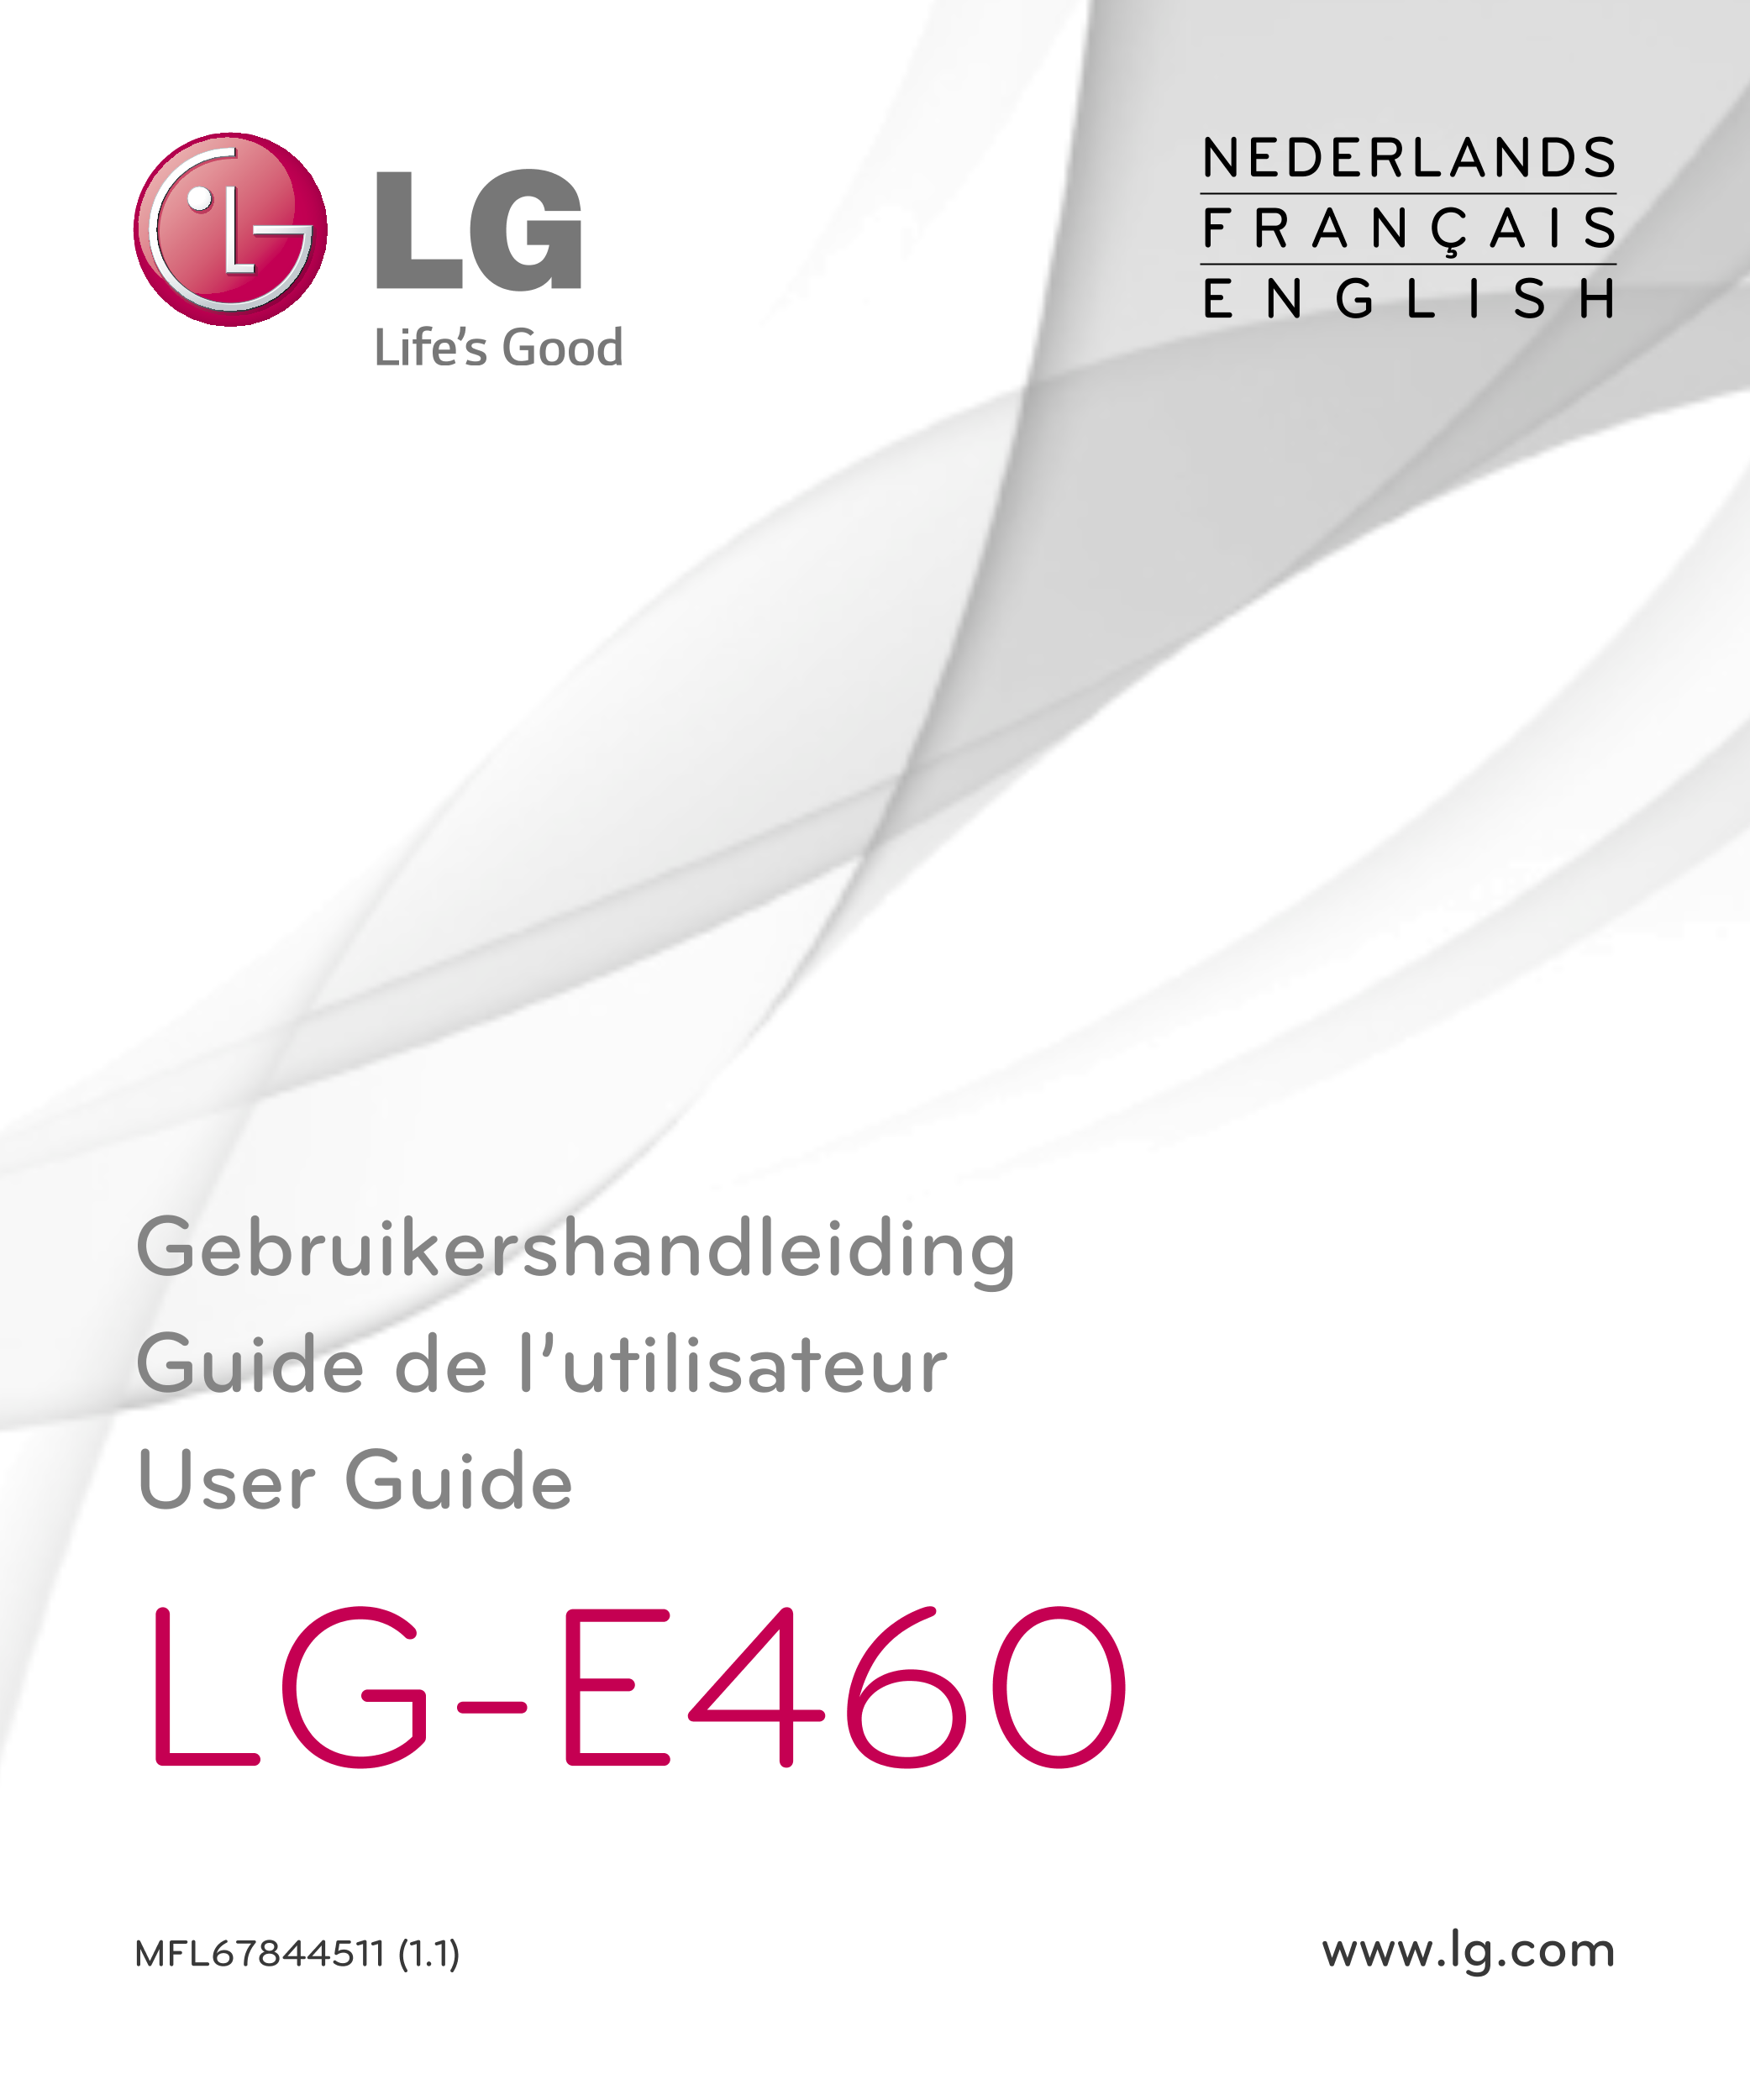 NEDERLANDS
F R A N Ç A I S
E N G L I S H
Gebruikershandleiding
Guide de l’utilisateur
User Guide
LG-E460
MFL67844511 (1.1) www.l